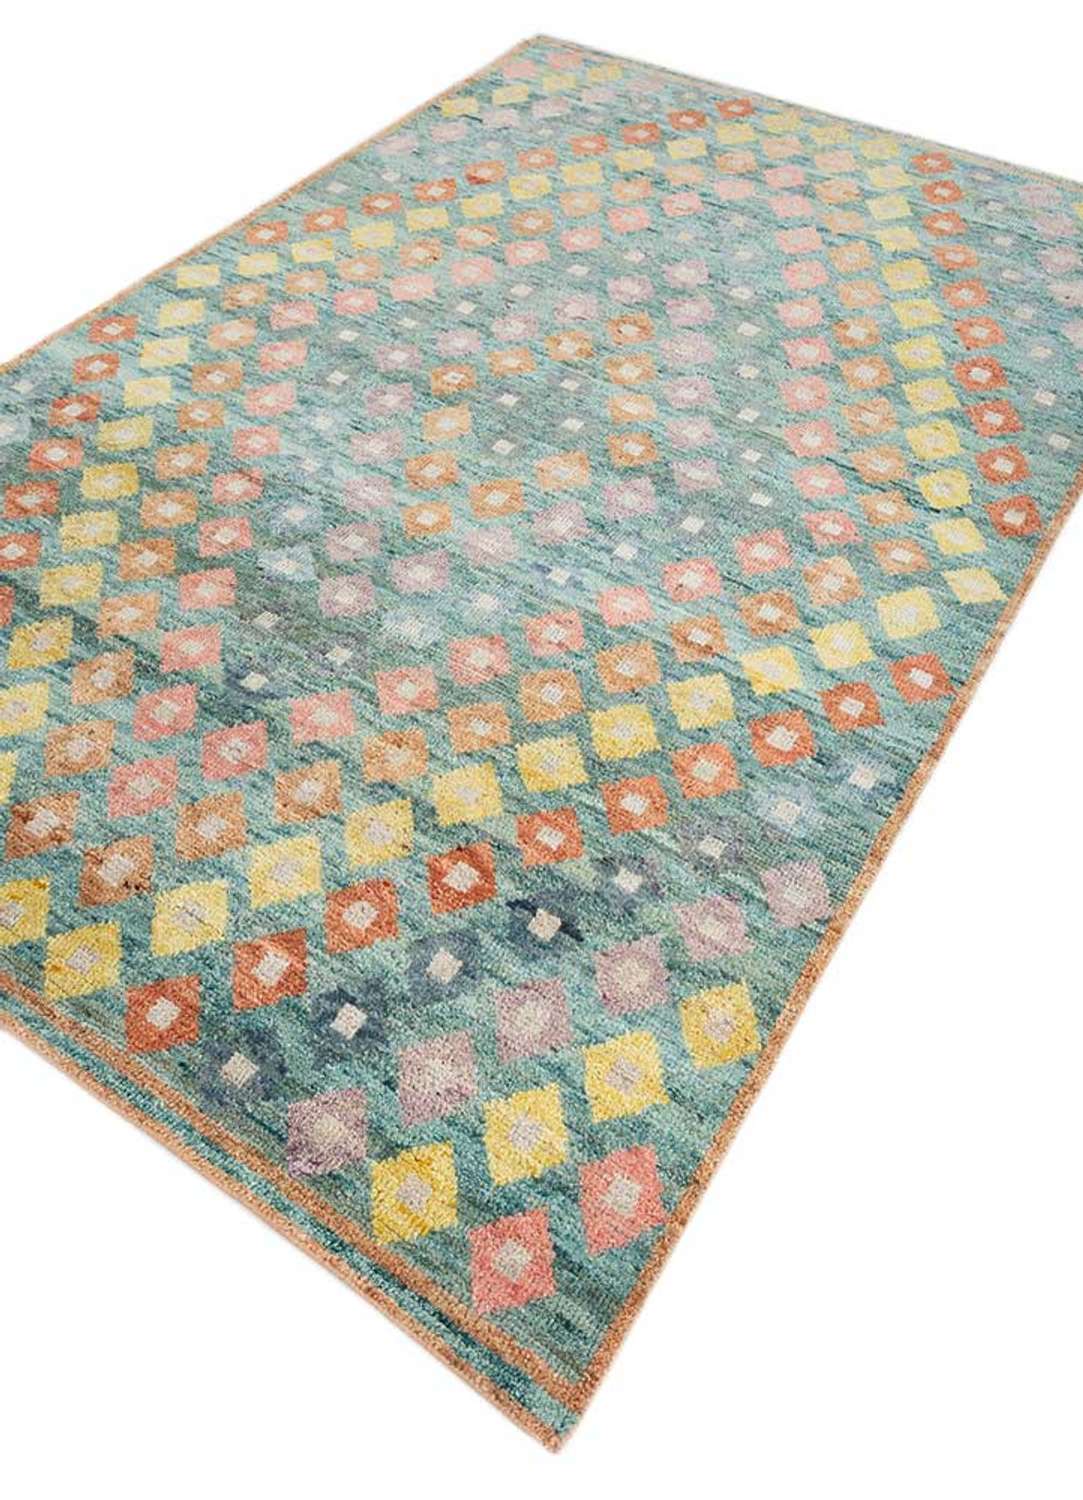 Designer tapijt - tainara - rechthoekig